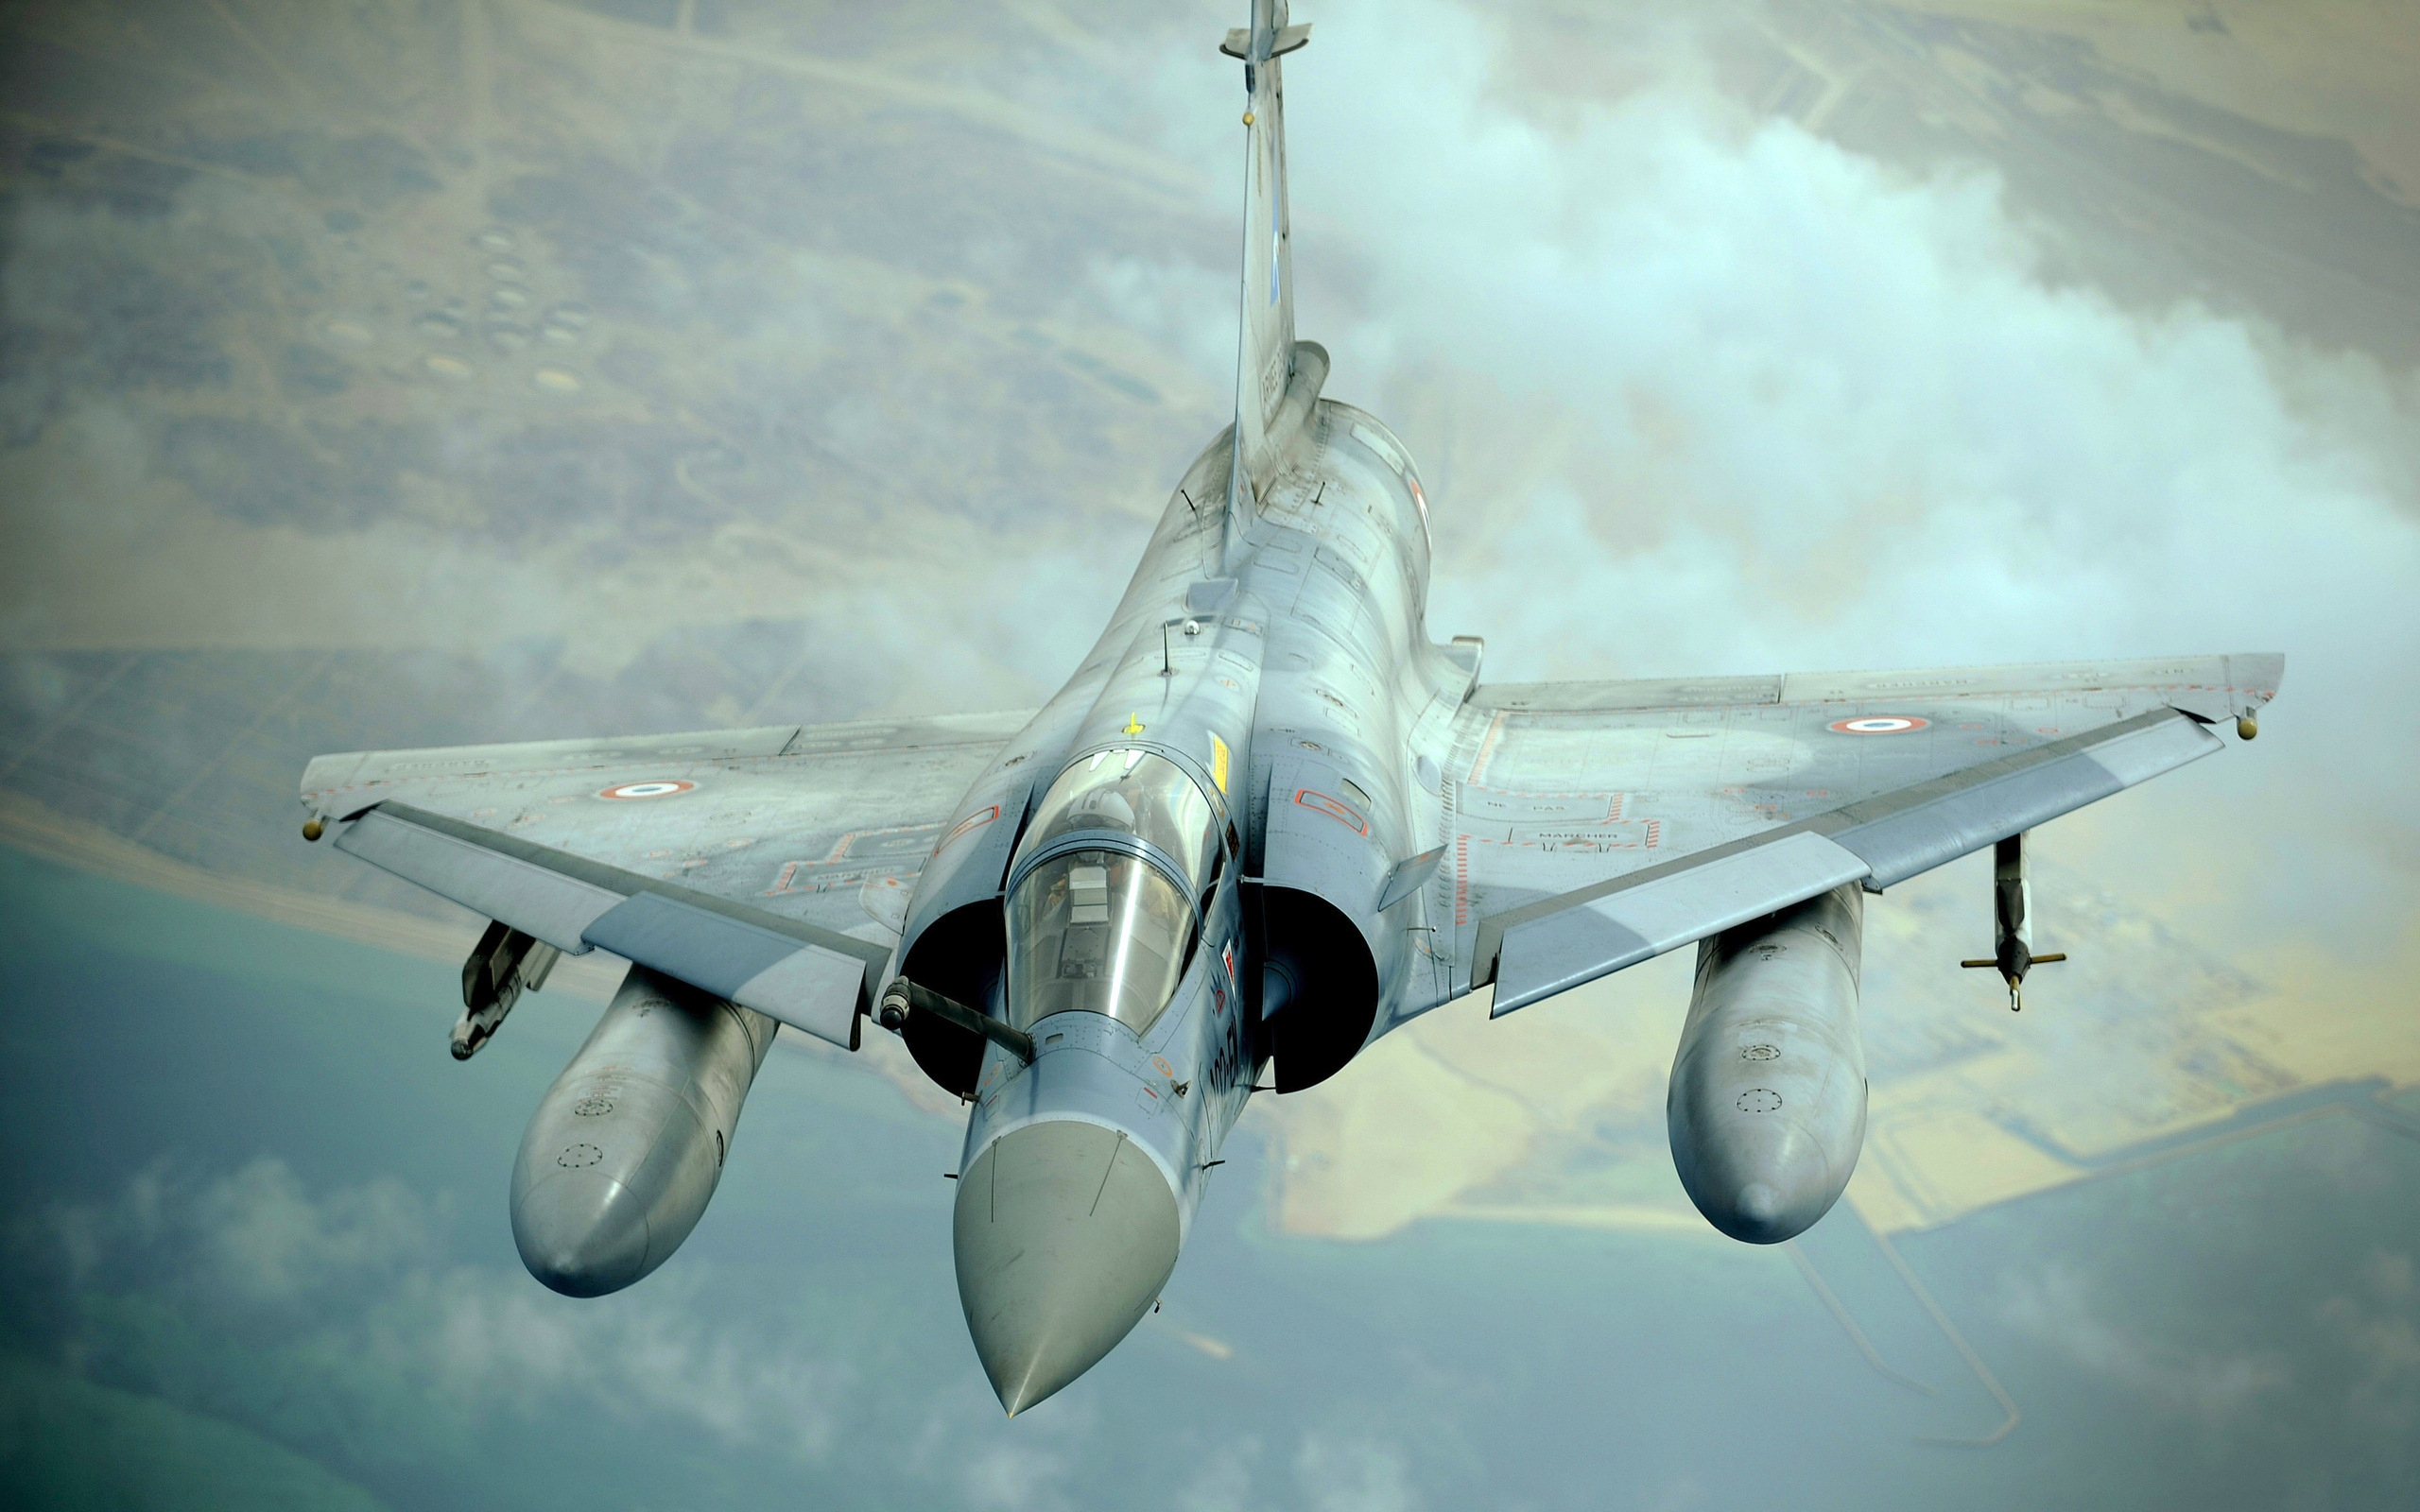 Dassault Mirage 2000 for 2560 x 1600 widescreen resolution